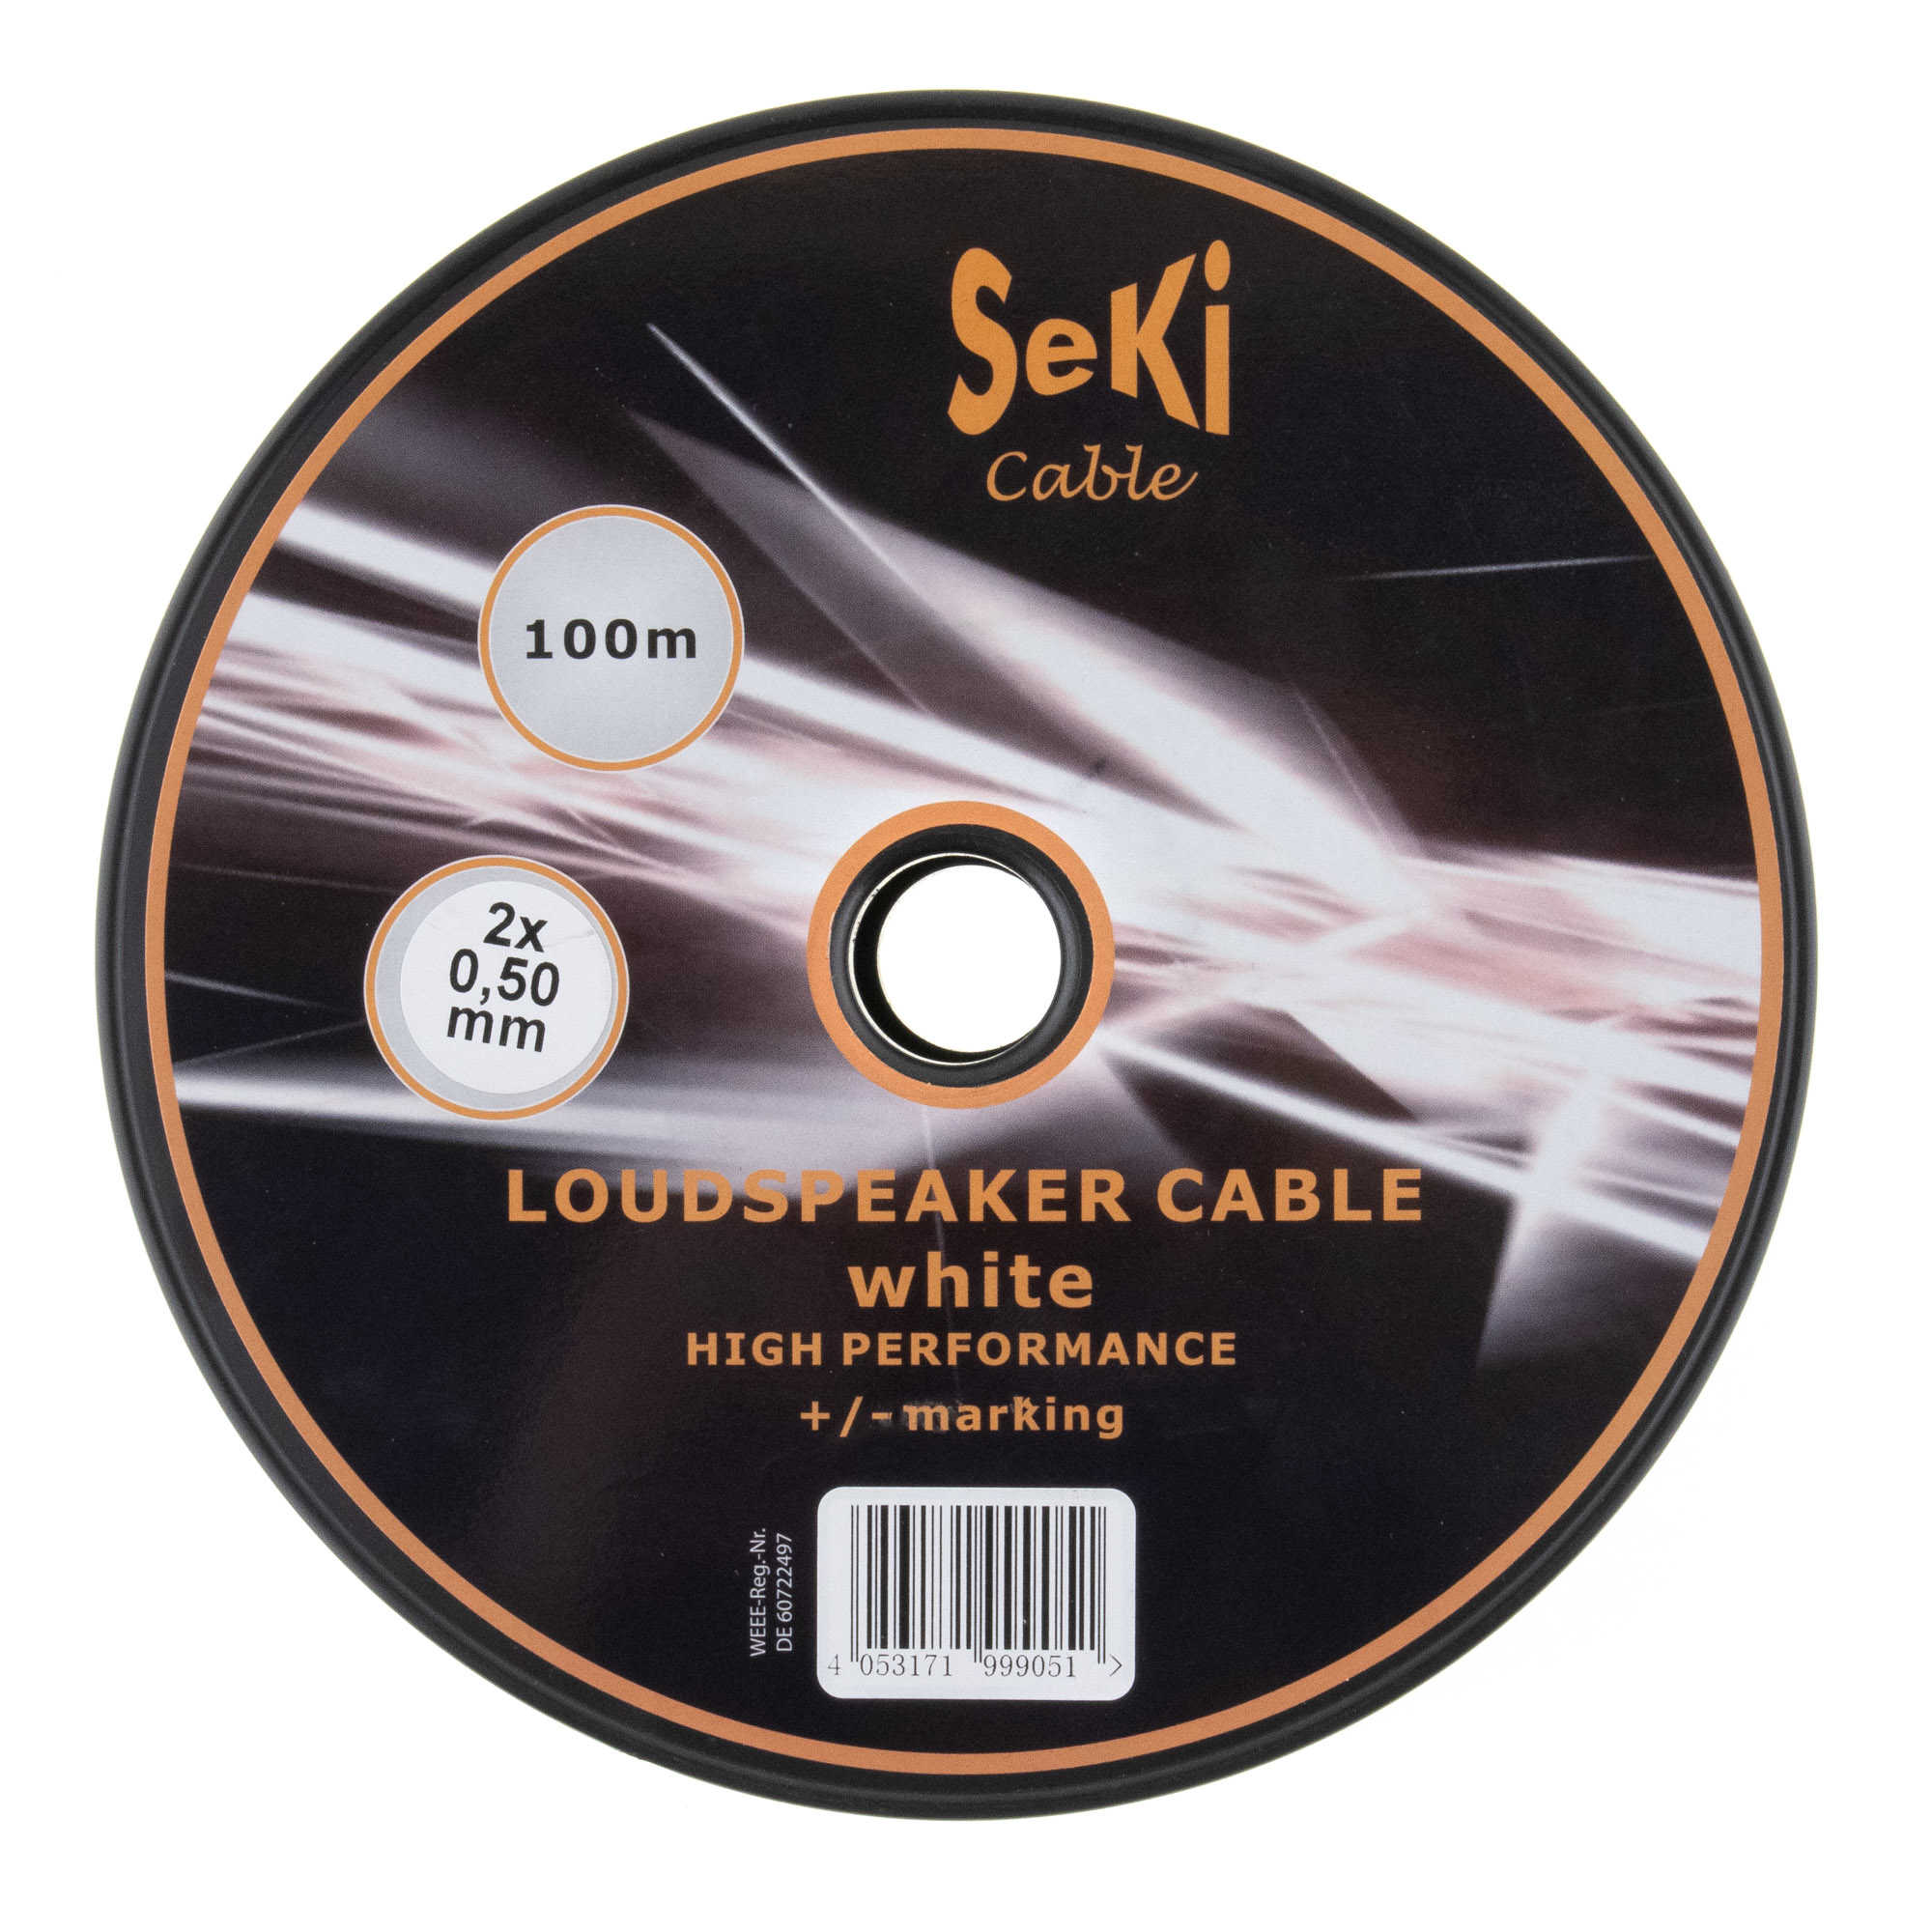 Loudspeaker cable white 100m 0.50mm